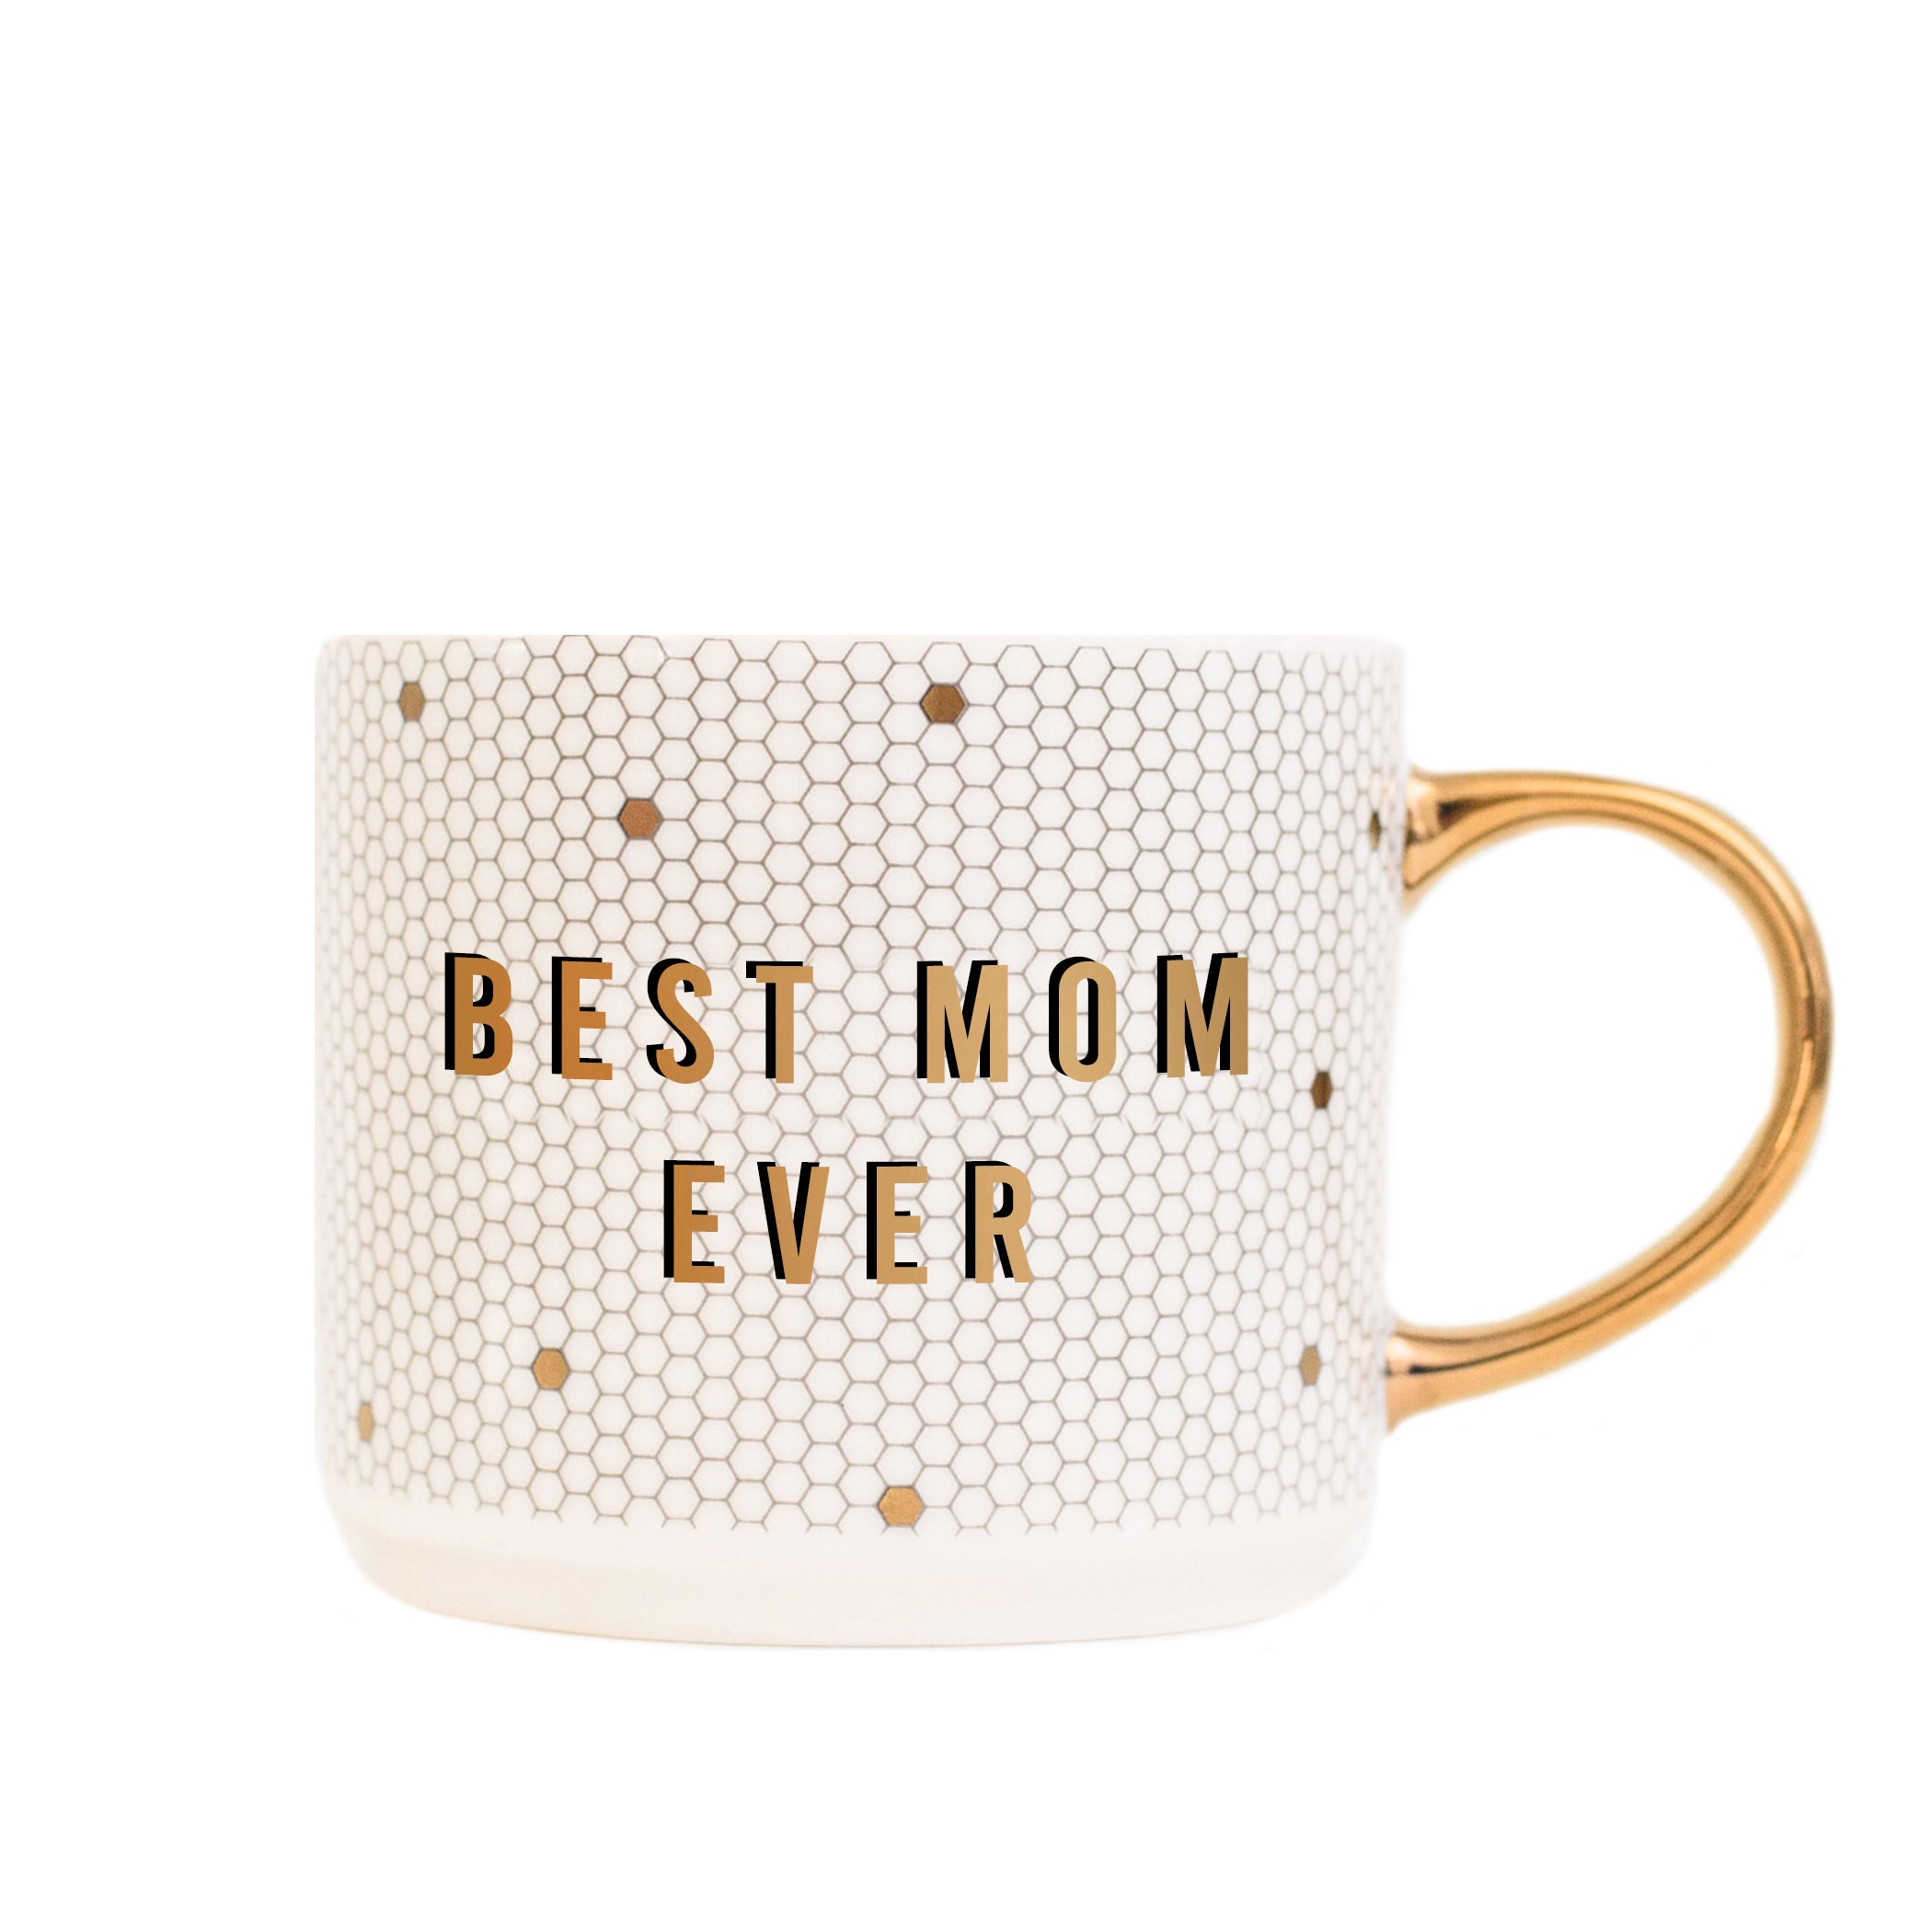 World's Best Mom Coffee Mug  Personalized Mug for Mom– Crystal